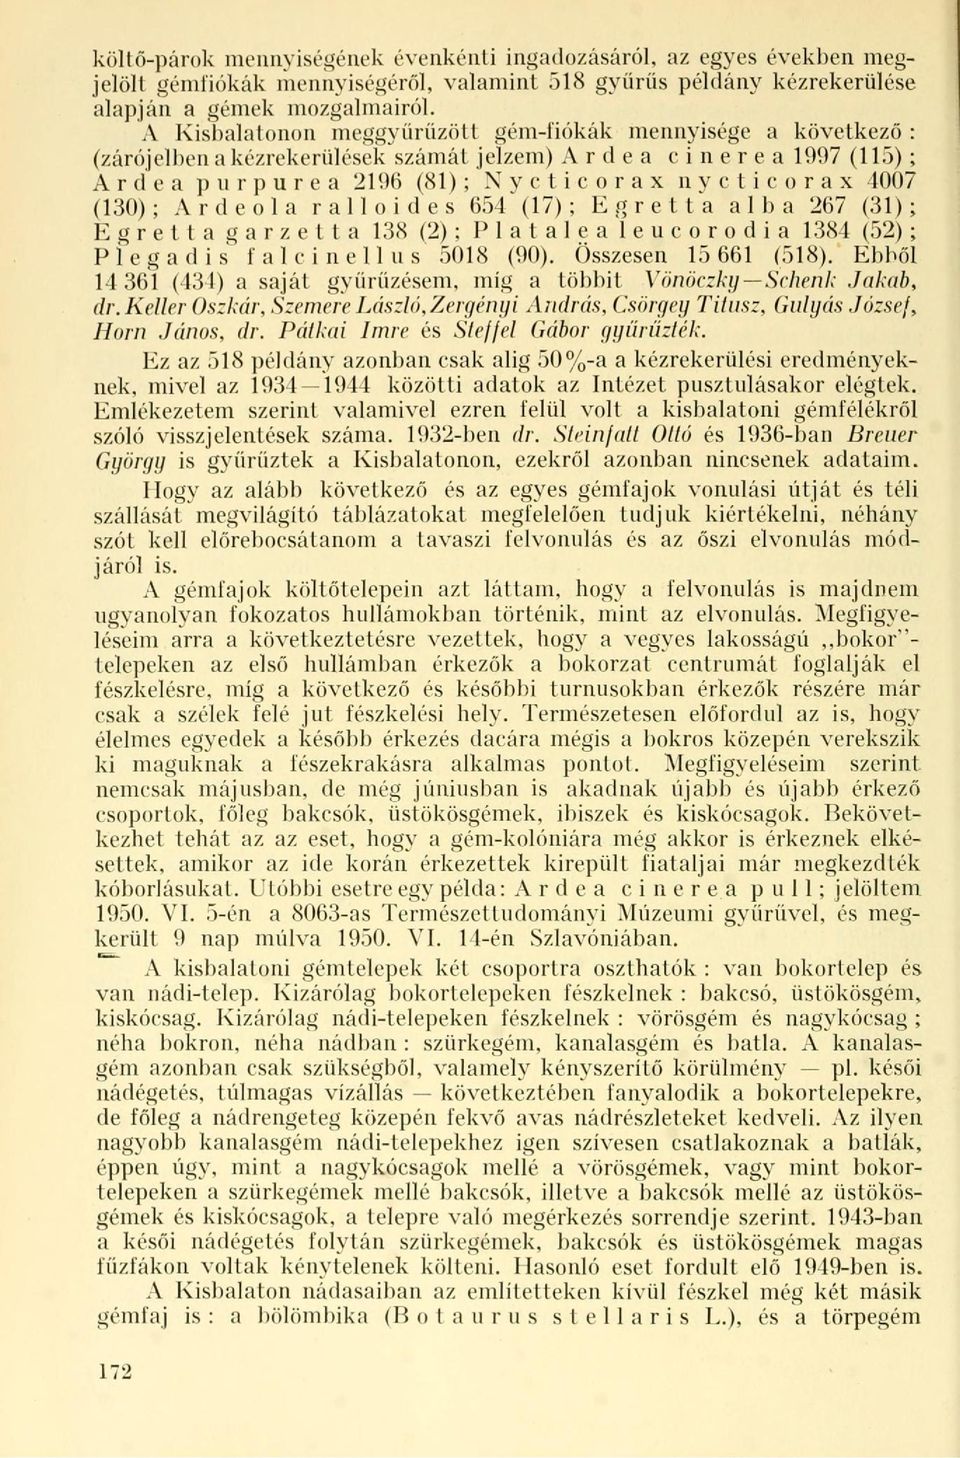 ralloides 654 (1); Egretta alba 26 (31); Egretta garzetta 138 (2); P 1 a t a 1 e a 1 e u c o r o d i a 1384 (52); Plegadis falcinellus 5018 (90). Összesen 15 661 (518).